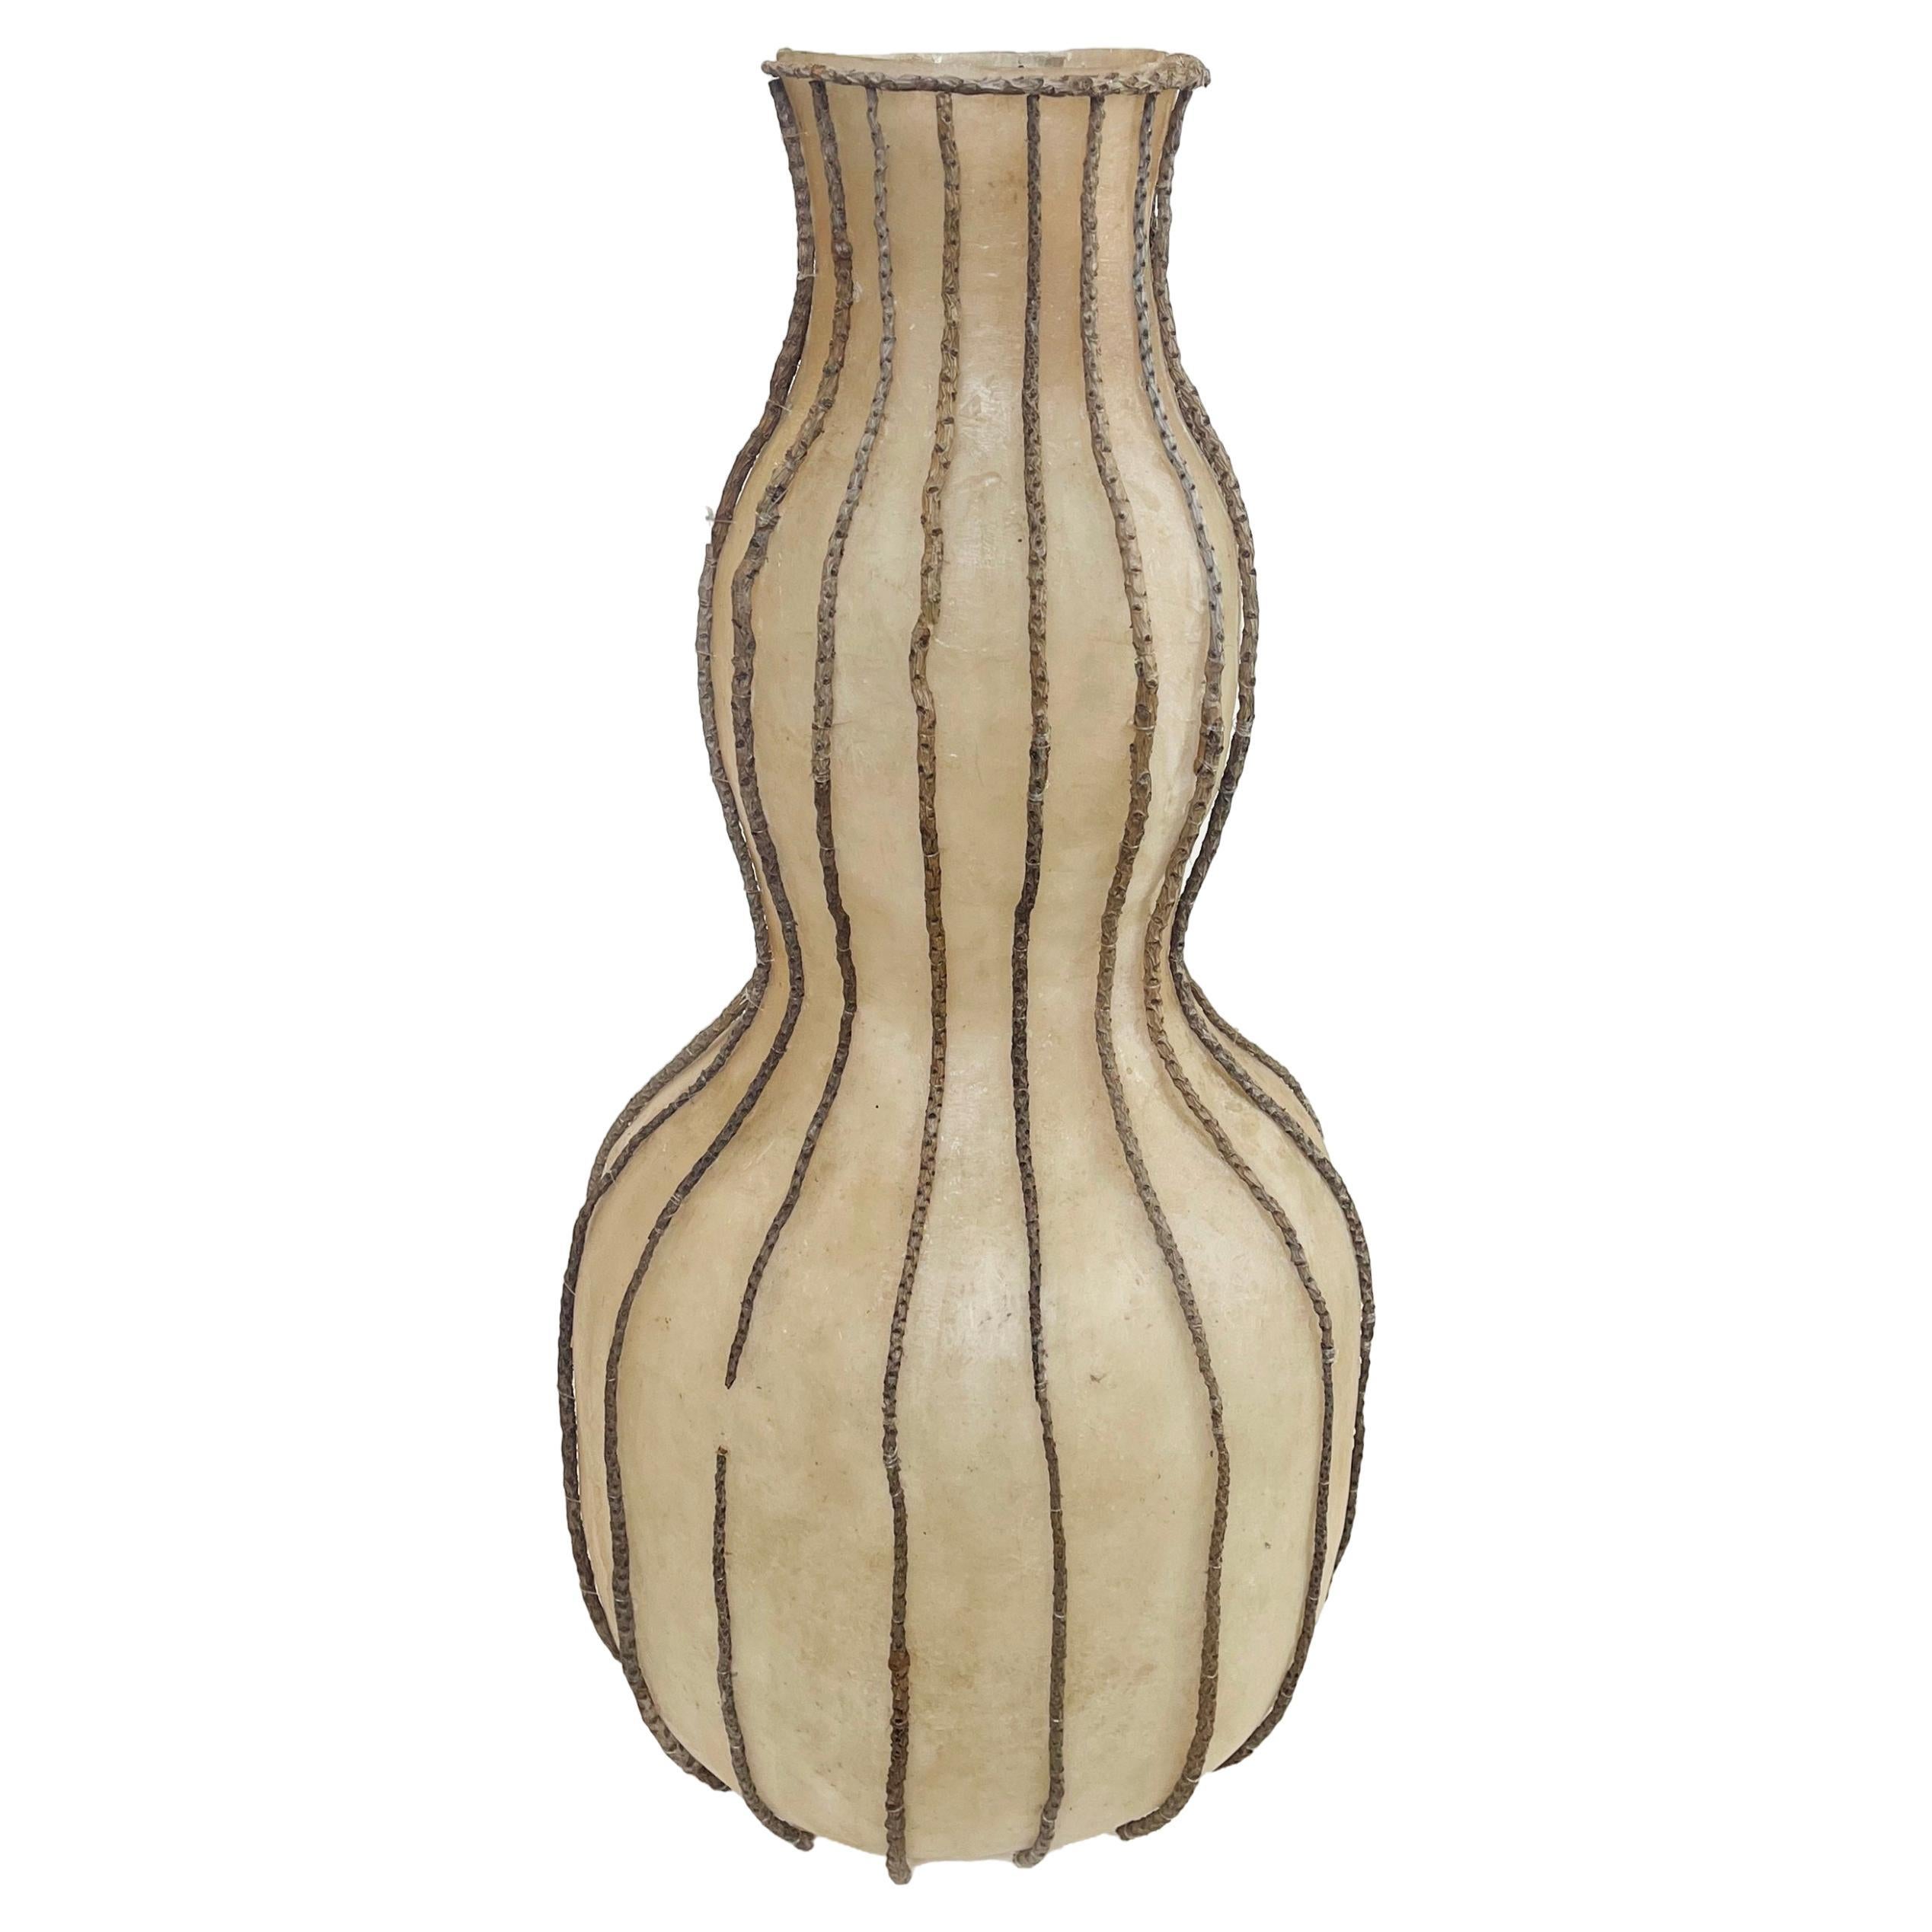 Modern Ethnic African Art Style Gourd Vessel or Vase Twigs & Fiberglass, 1970s